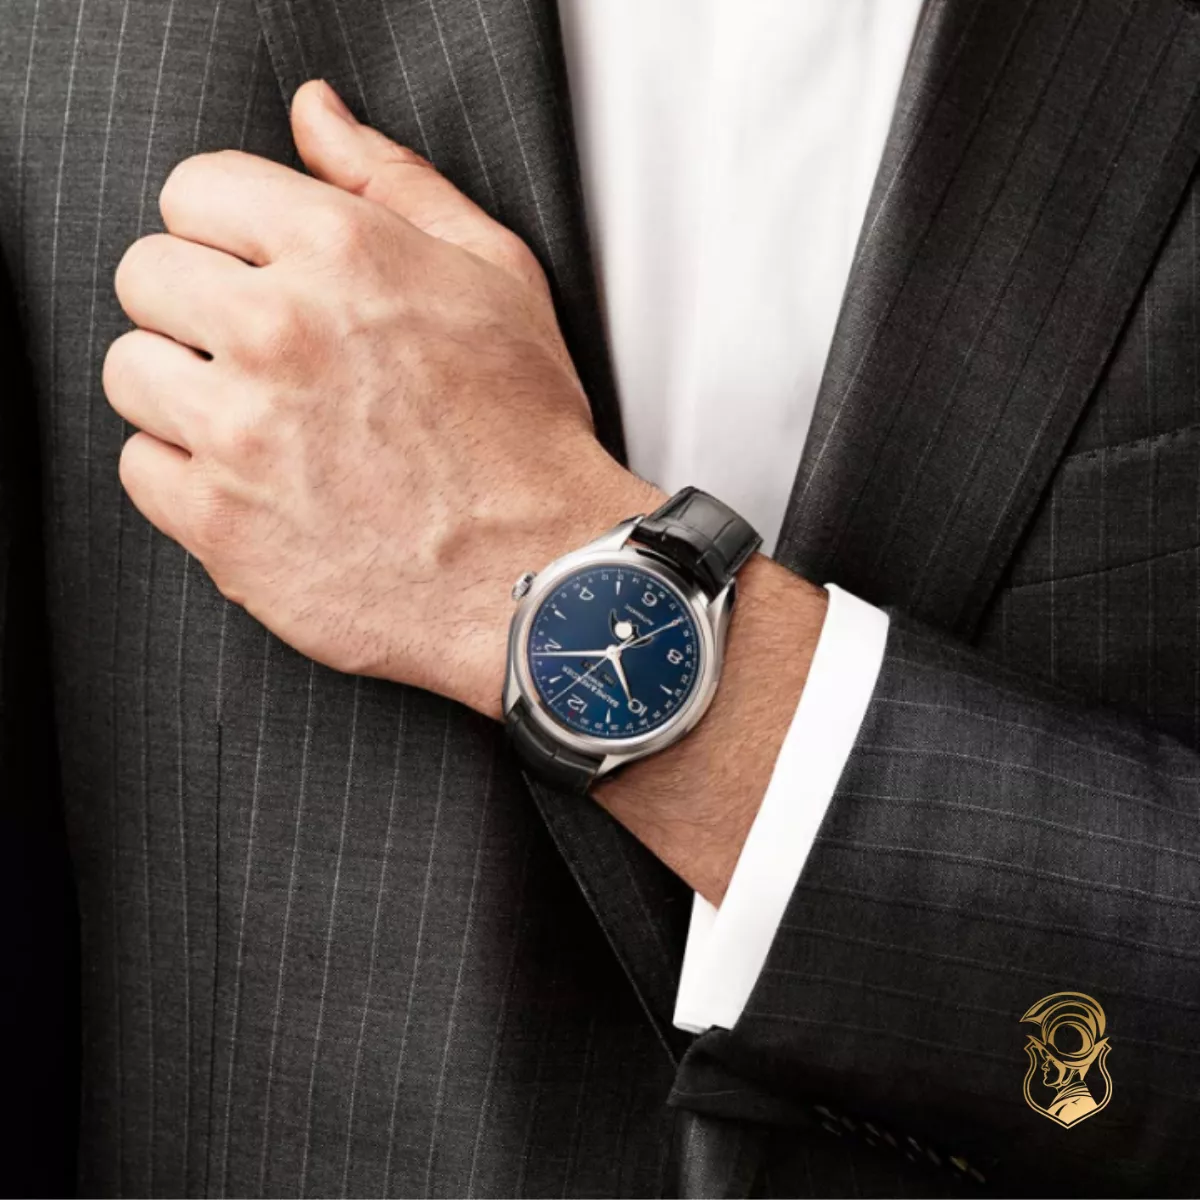 Baume & Mercier Clifton 10057 Blue Watch 43mm